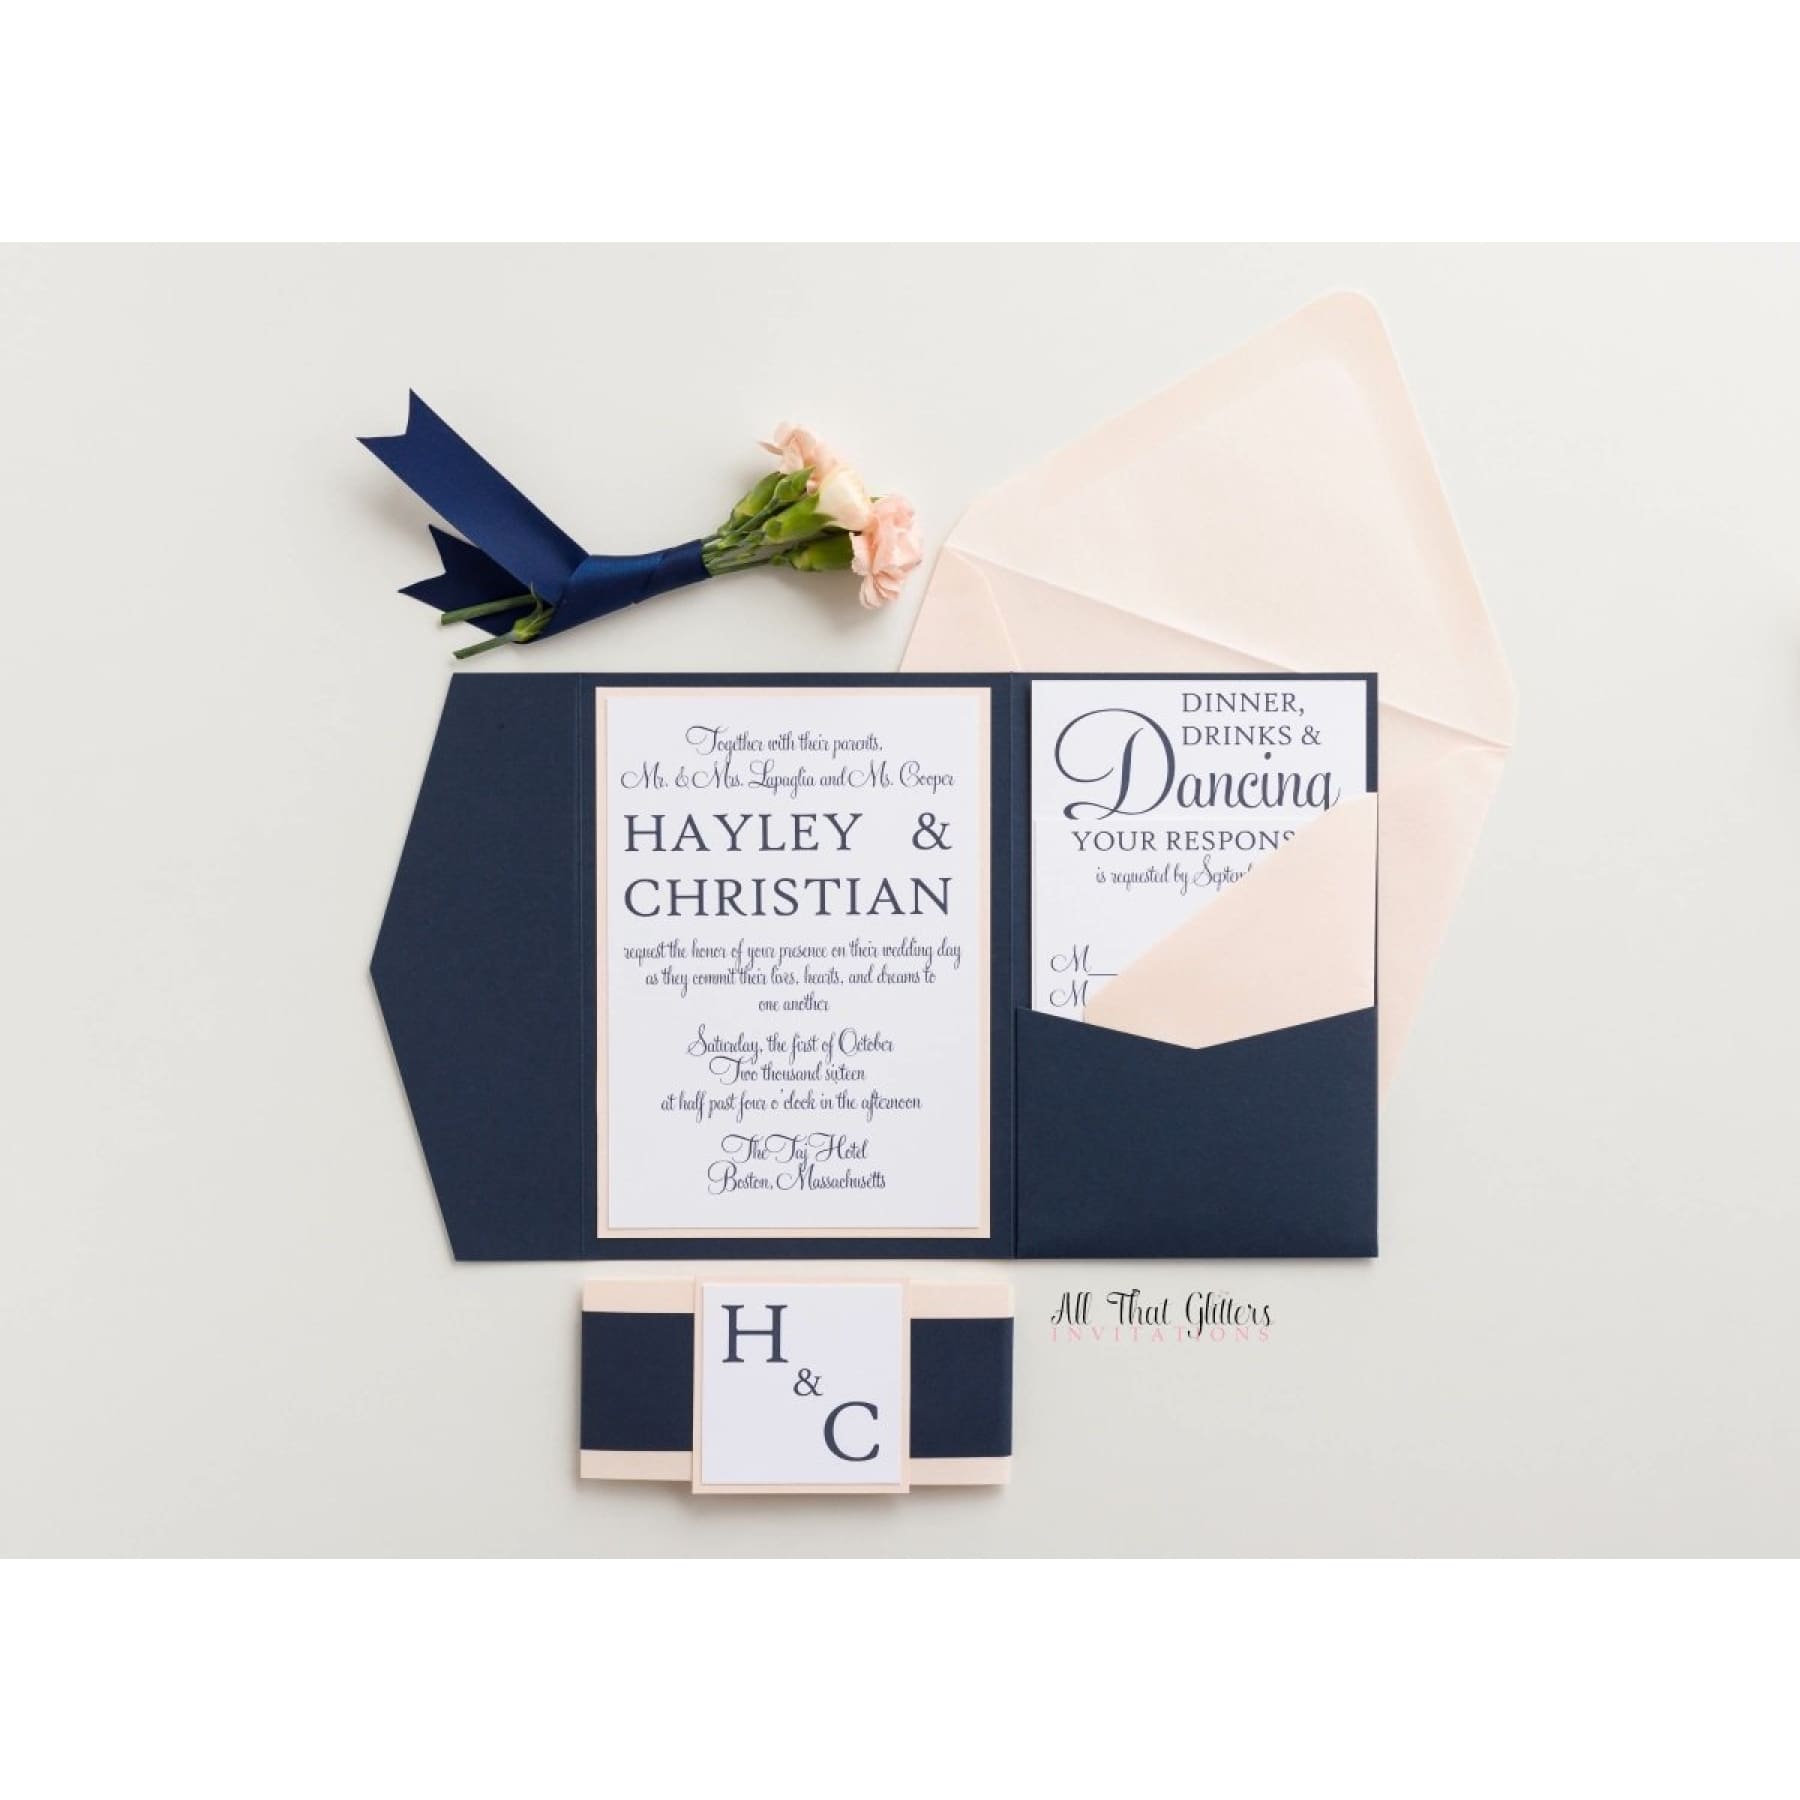 Modern Classic Wedding Invitation, Hayley - All That Glitters Invitations